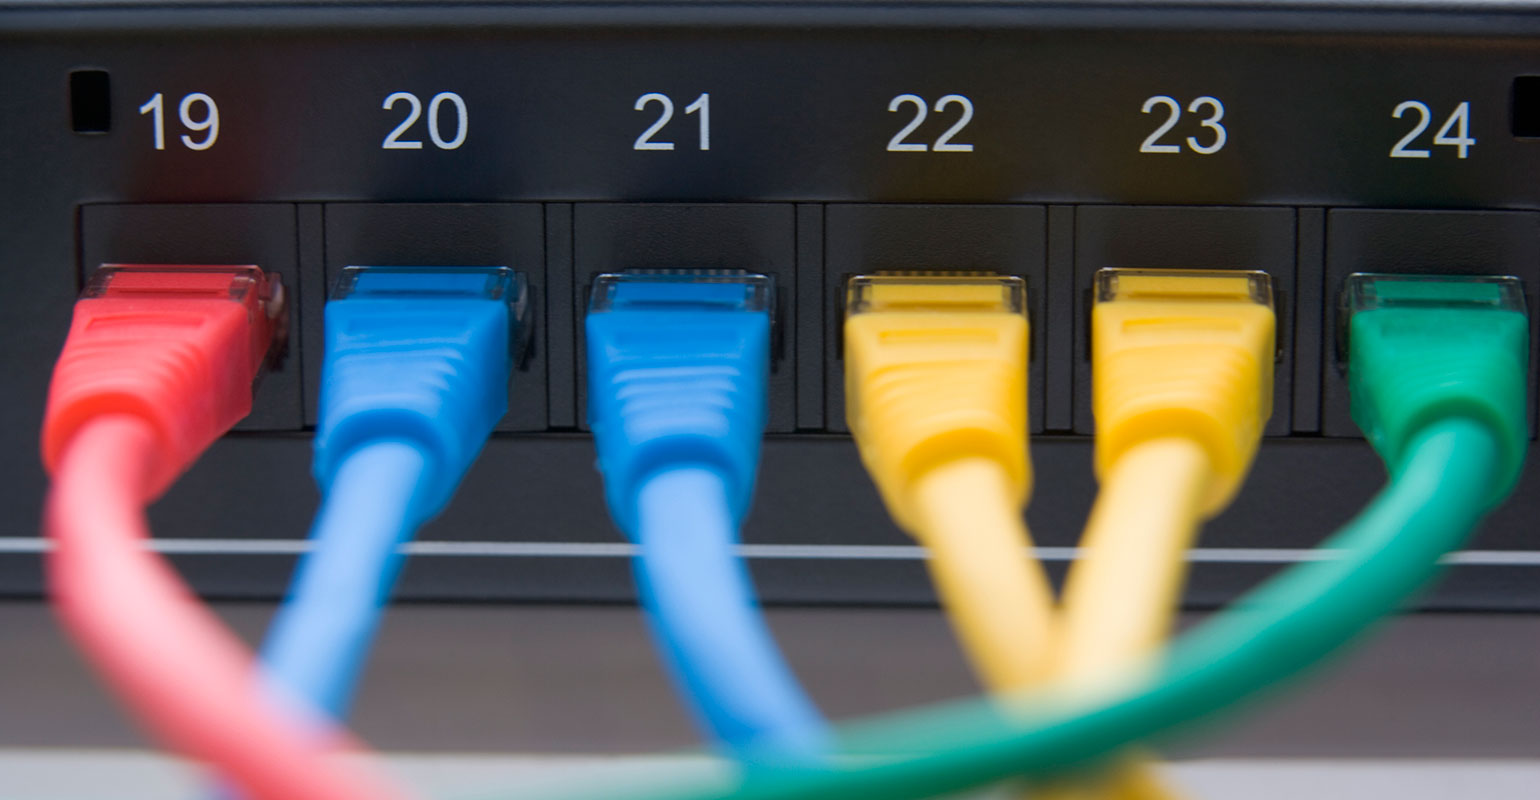 Deutsche Telekom Routers Targeted in Attack Hacking Global